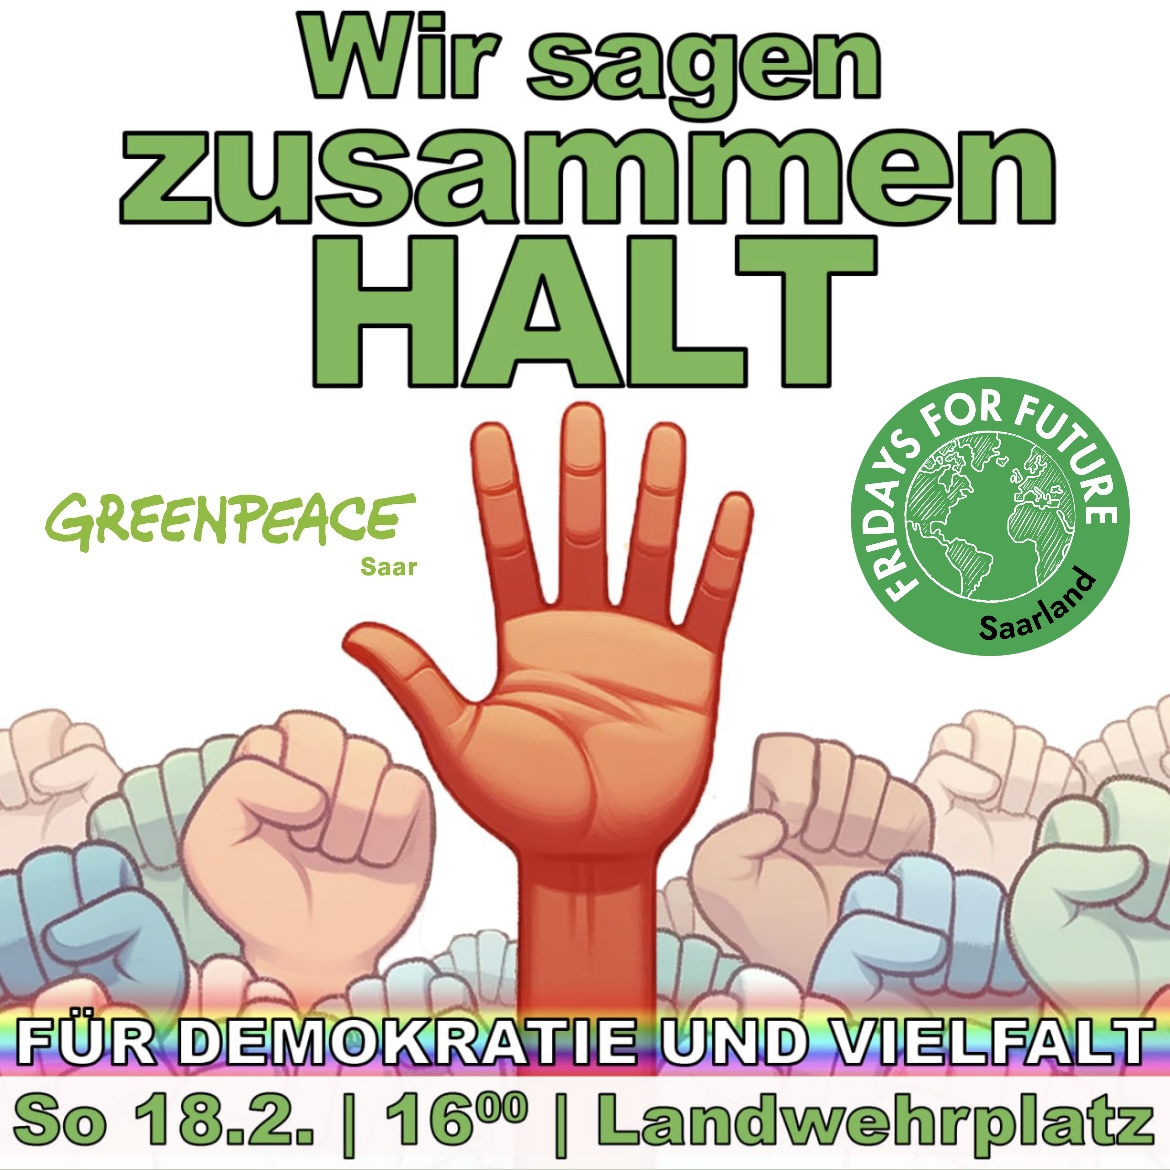 Greenpeace Saar, Fridays for Future Saarland, Students for Future Saar, Saarland for Future